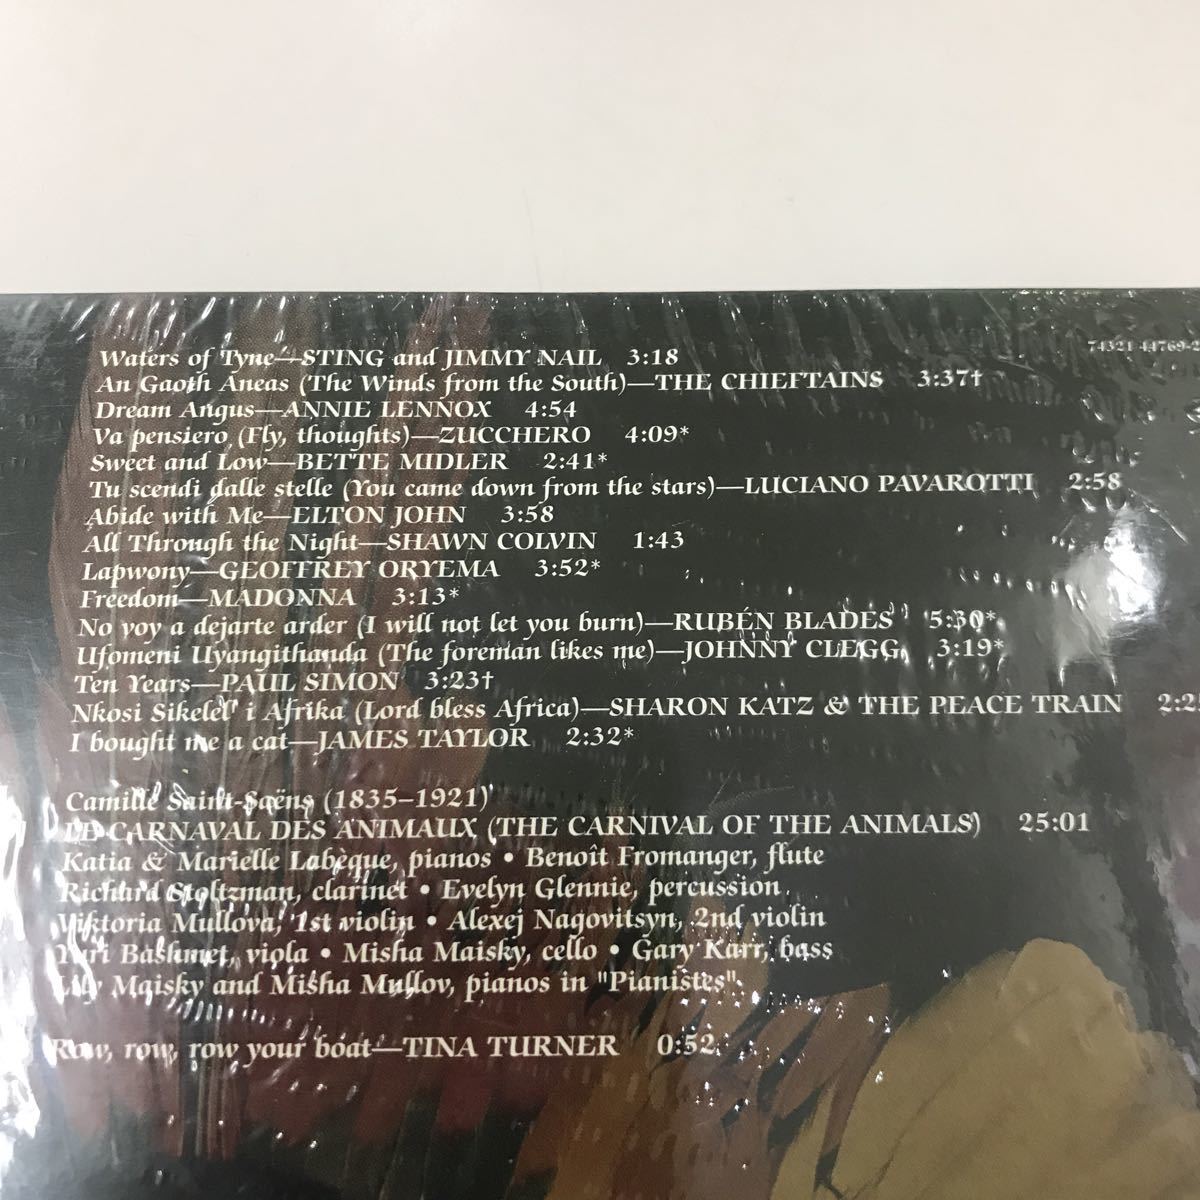 CD 輸入盤未開封【洋楽】長期保存品　CARNIVAL!